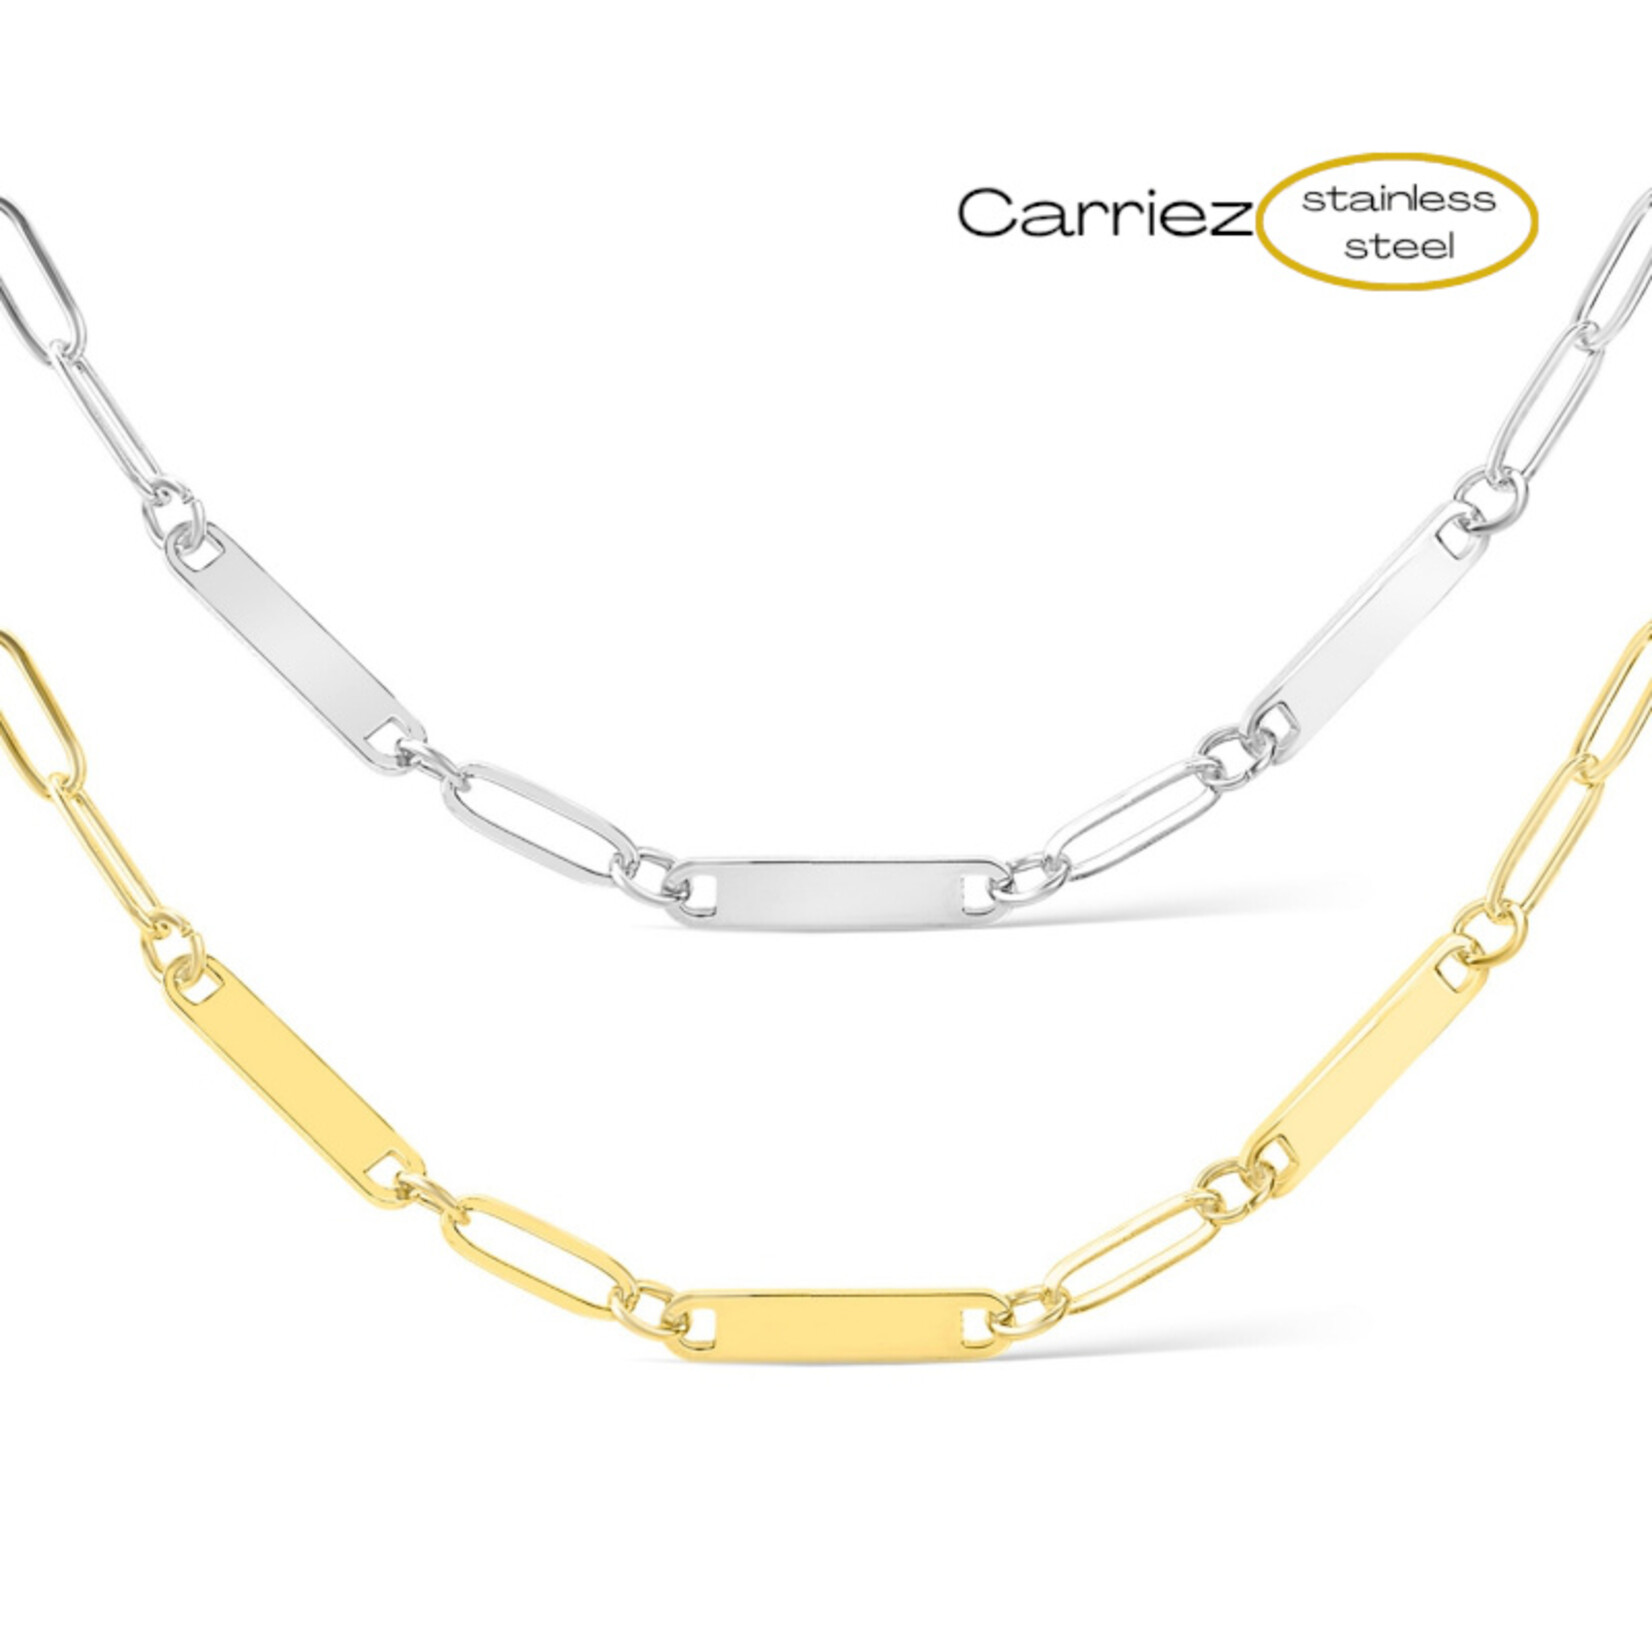 Carriez Paperclip drie namen ketting goud - premium stainless steel